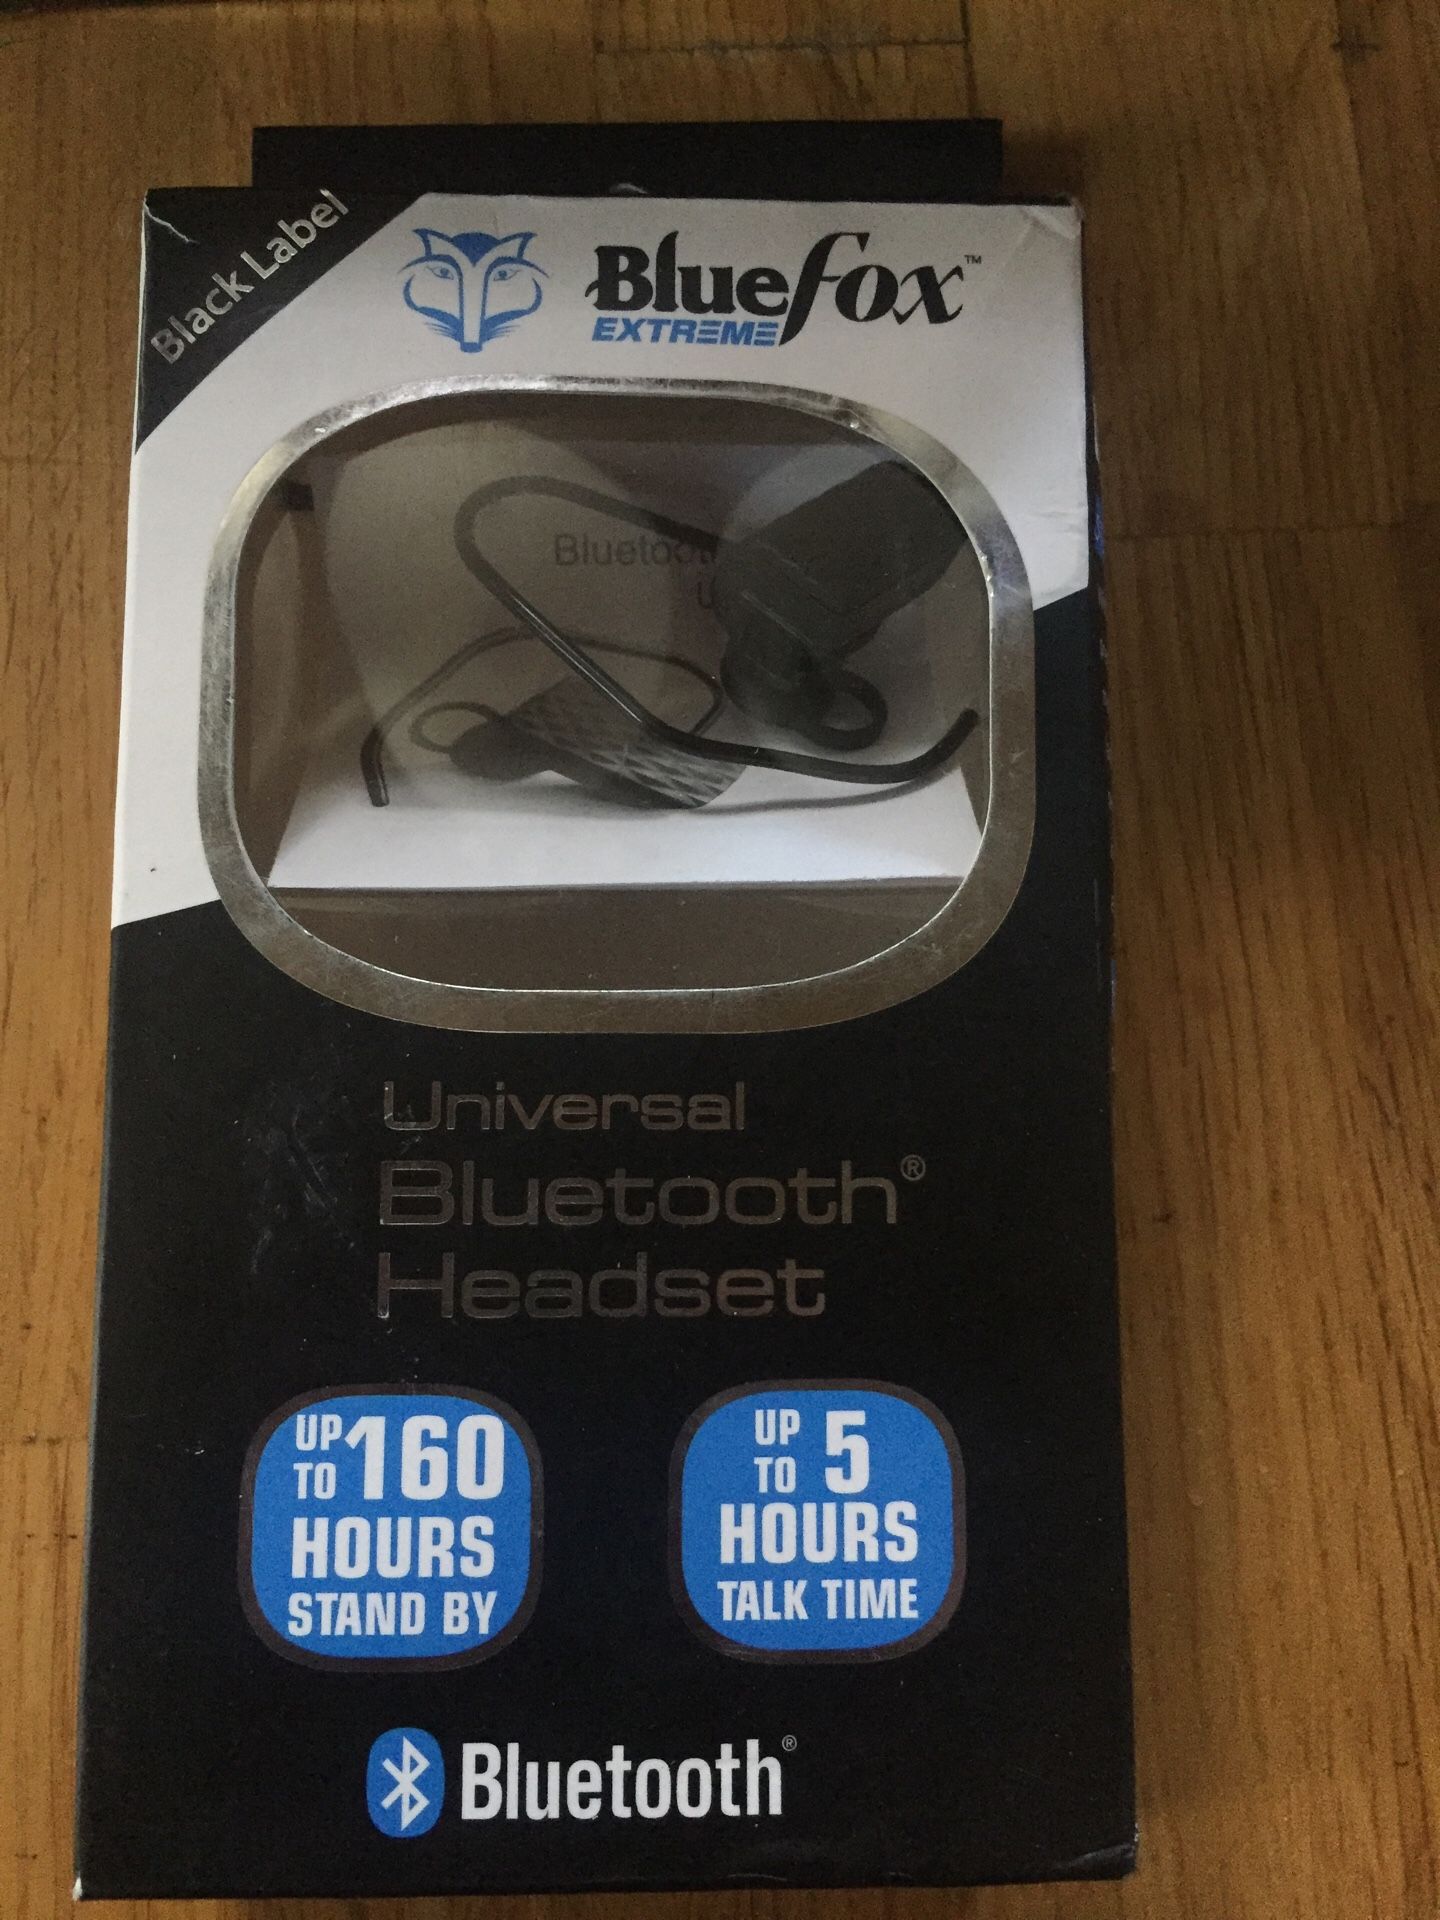 Blue fox Bluetooth headset